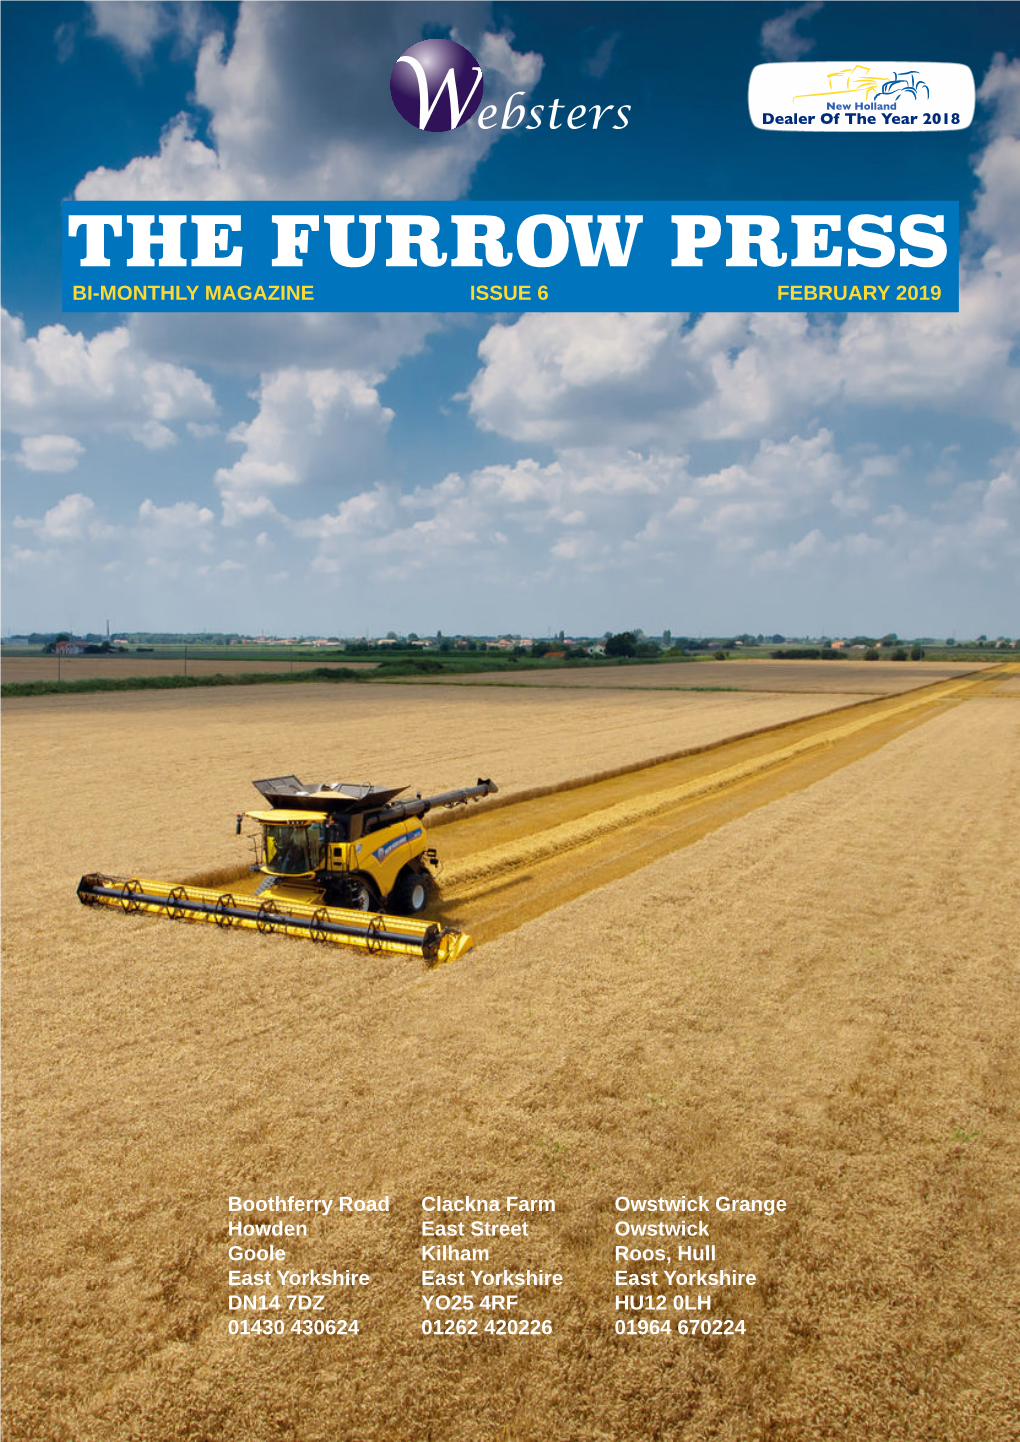 The Furrow Press Bi-Monthly Magazine Issue 6 February 2019